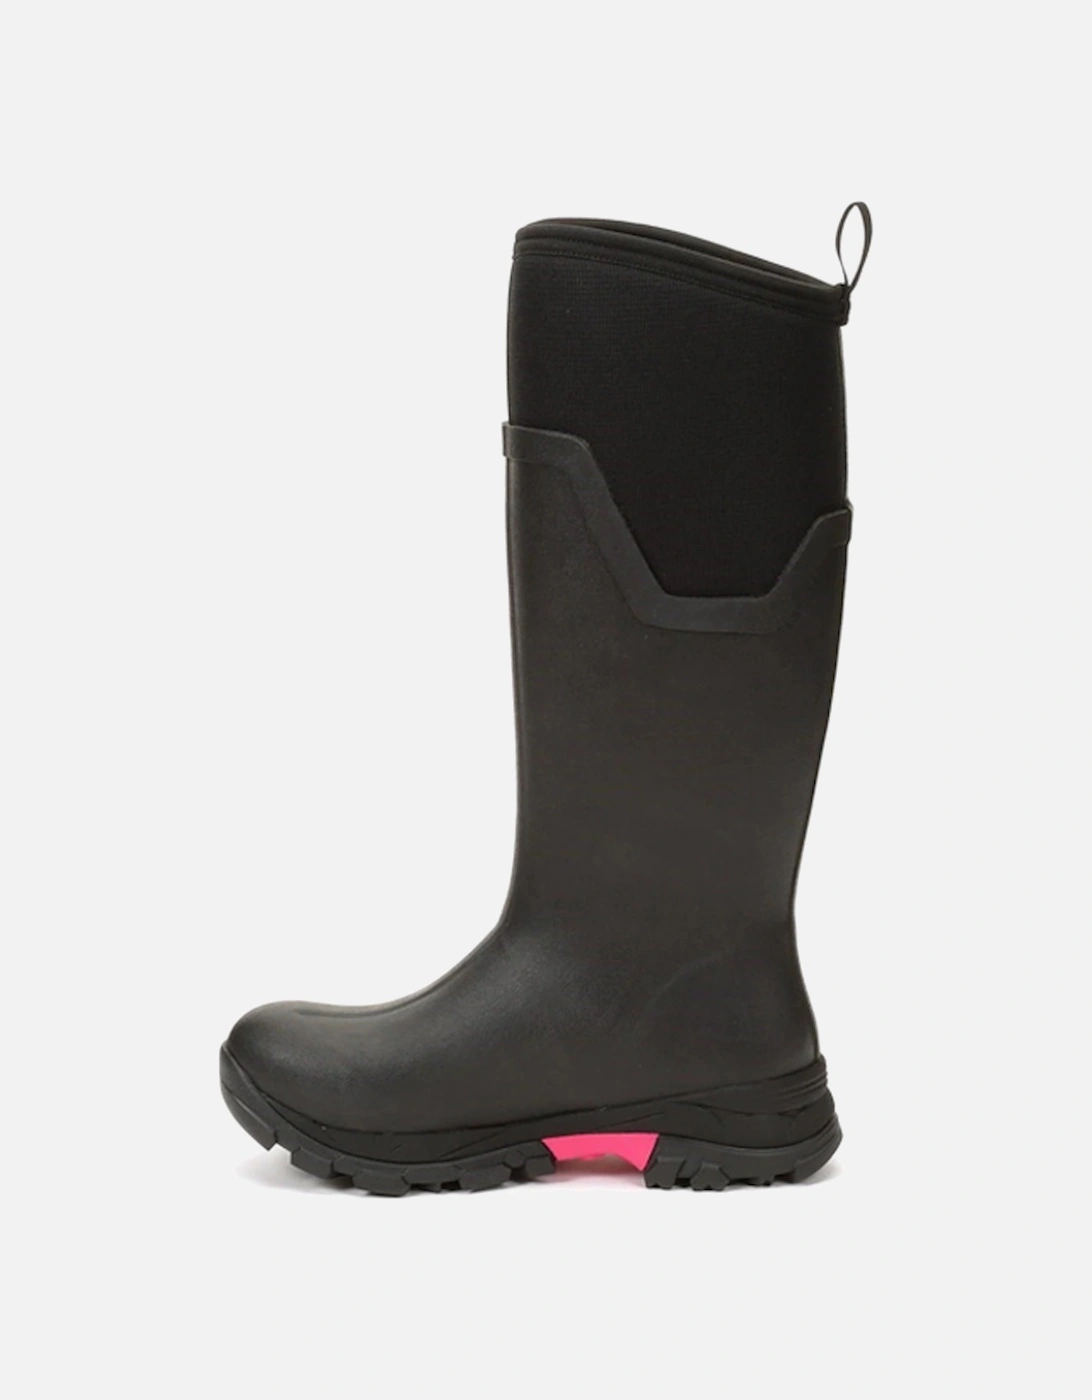 Muck Boots Women's Arctic Ice Tall Wellies Black/Hot Pink DFS